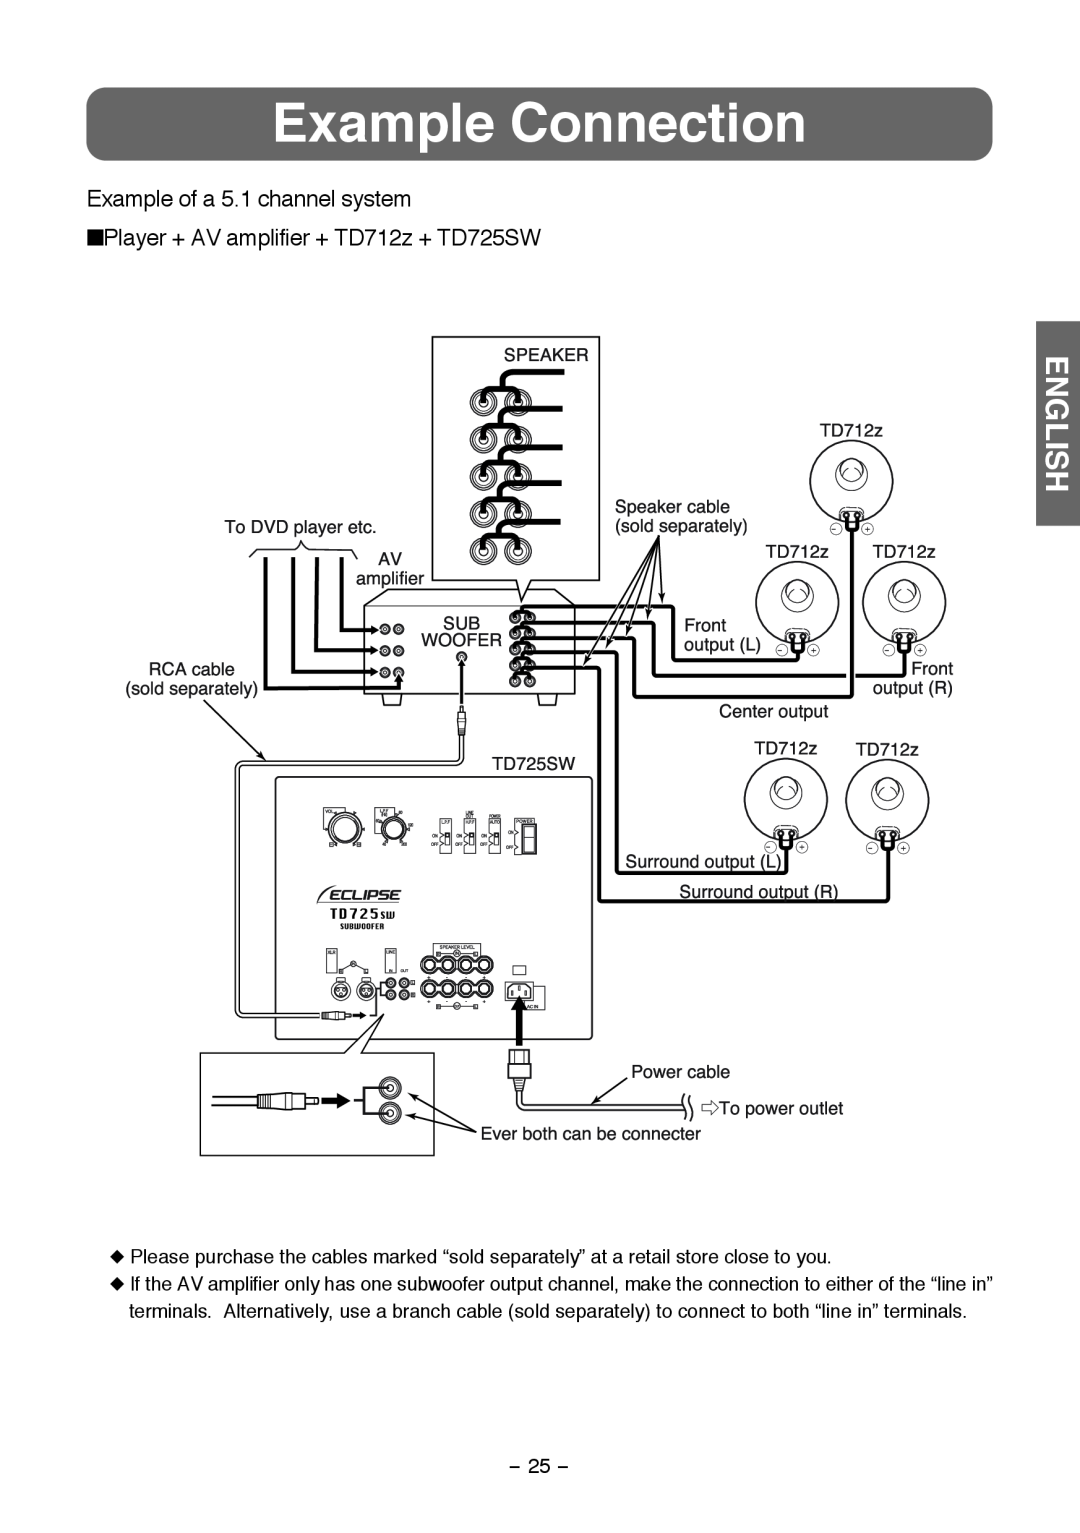 Fujitsu instruction manual Example Connection, Player + AV amplifier + TD712z + TD725SW, English 